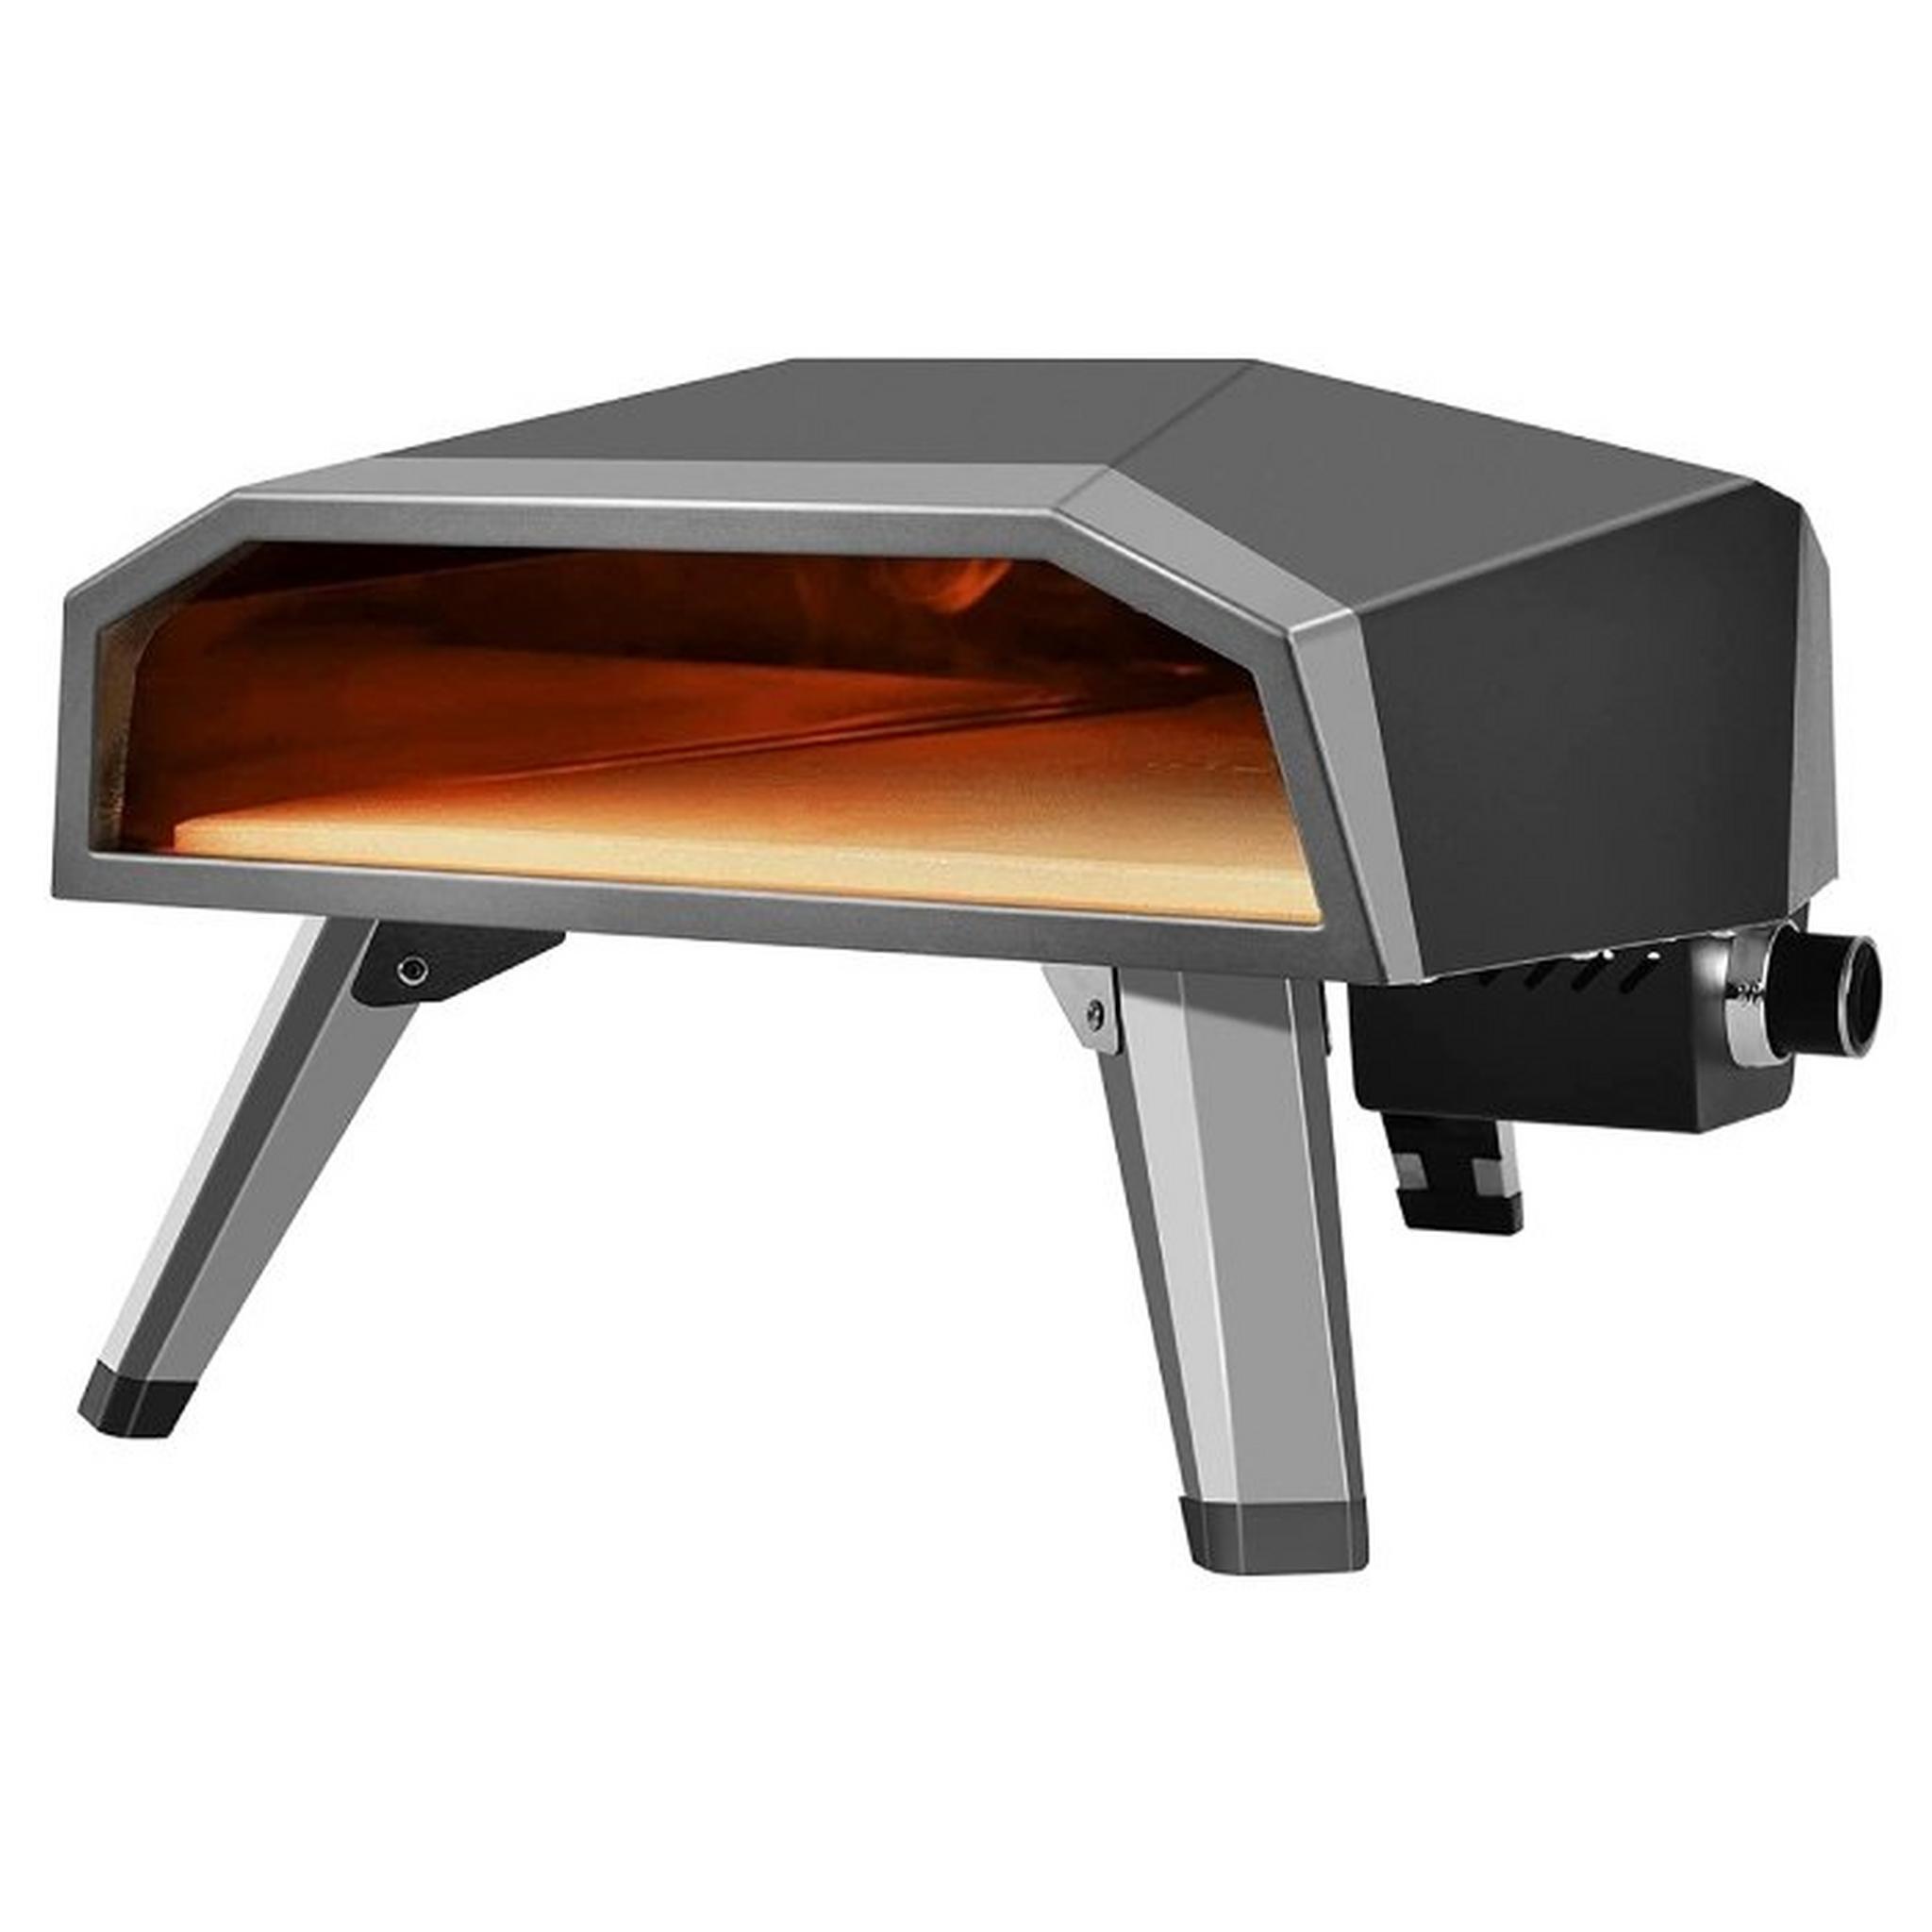 Frigidaire Pizza Oven (FD220P)